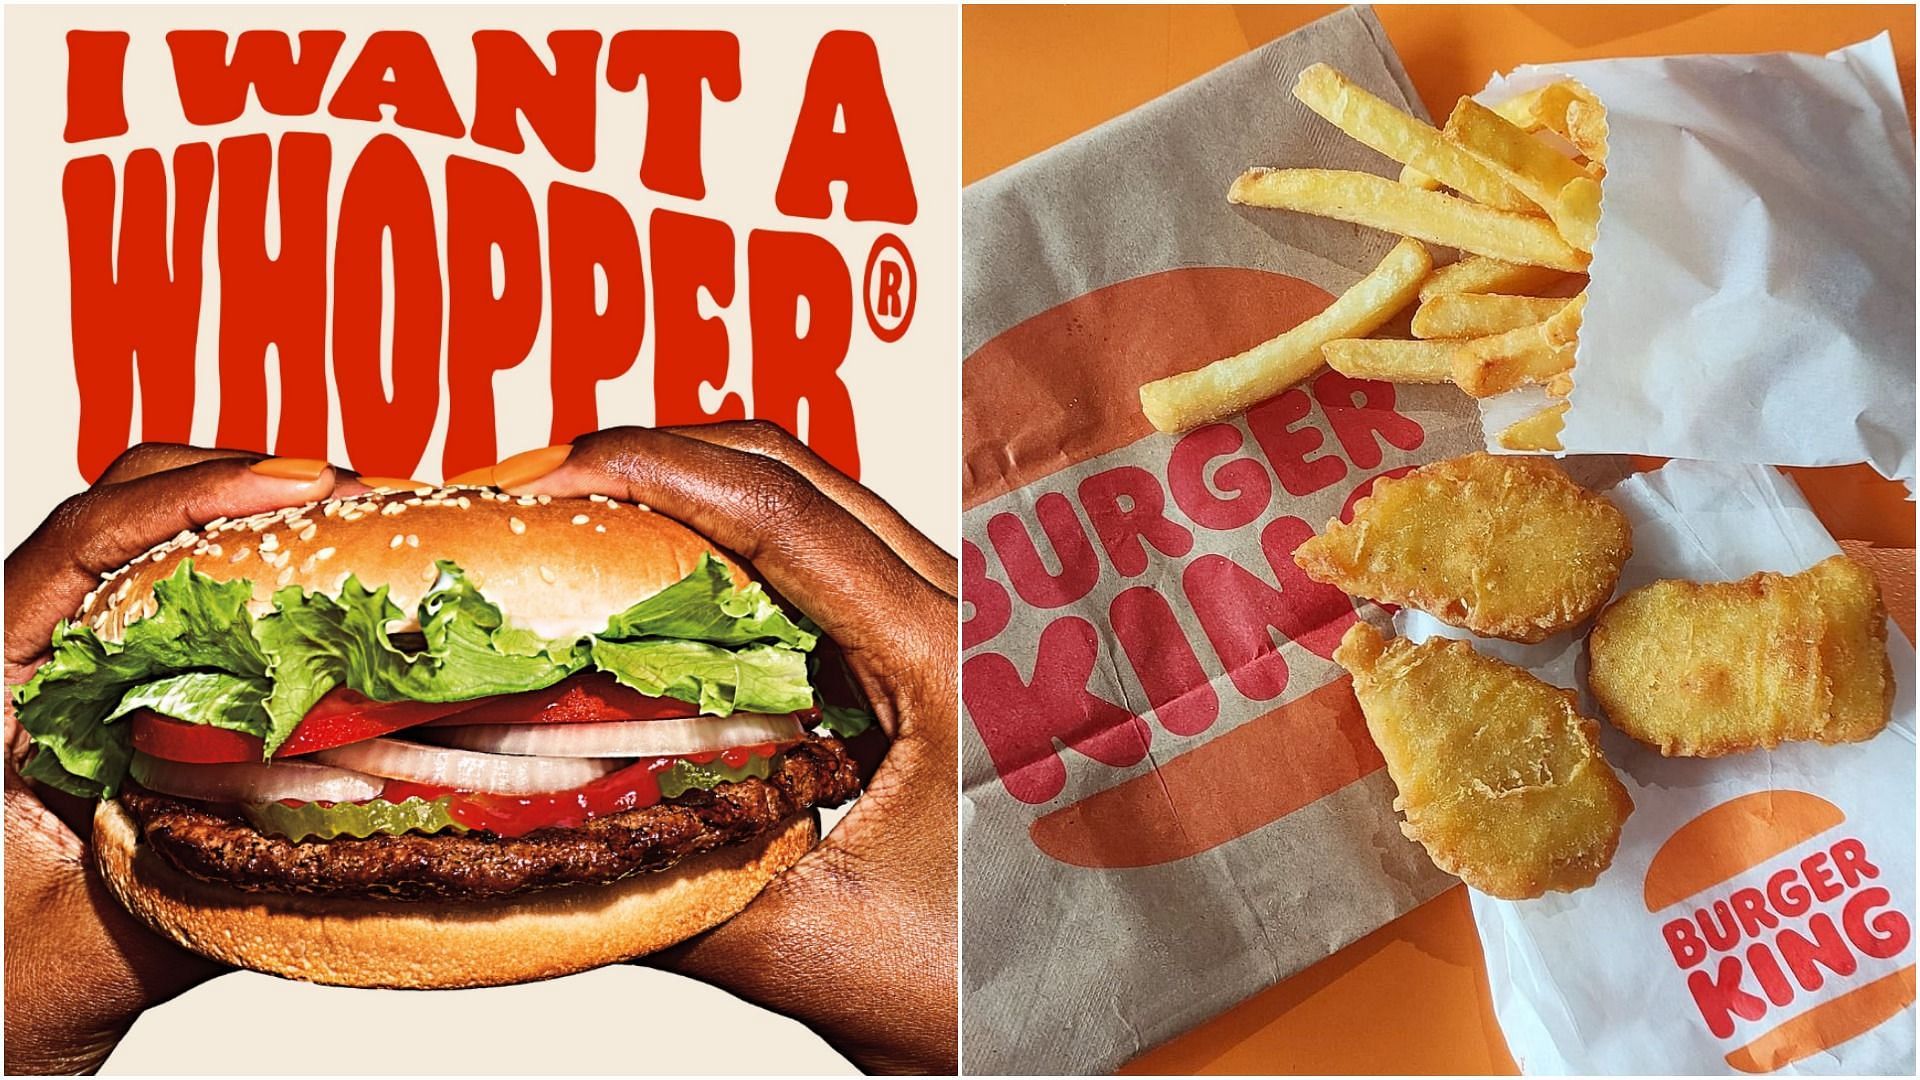 Burger King UK is providing free Whoppers on May 18 (Image via @burgerkinguk/Twitter)